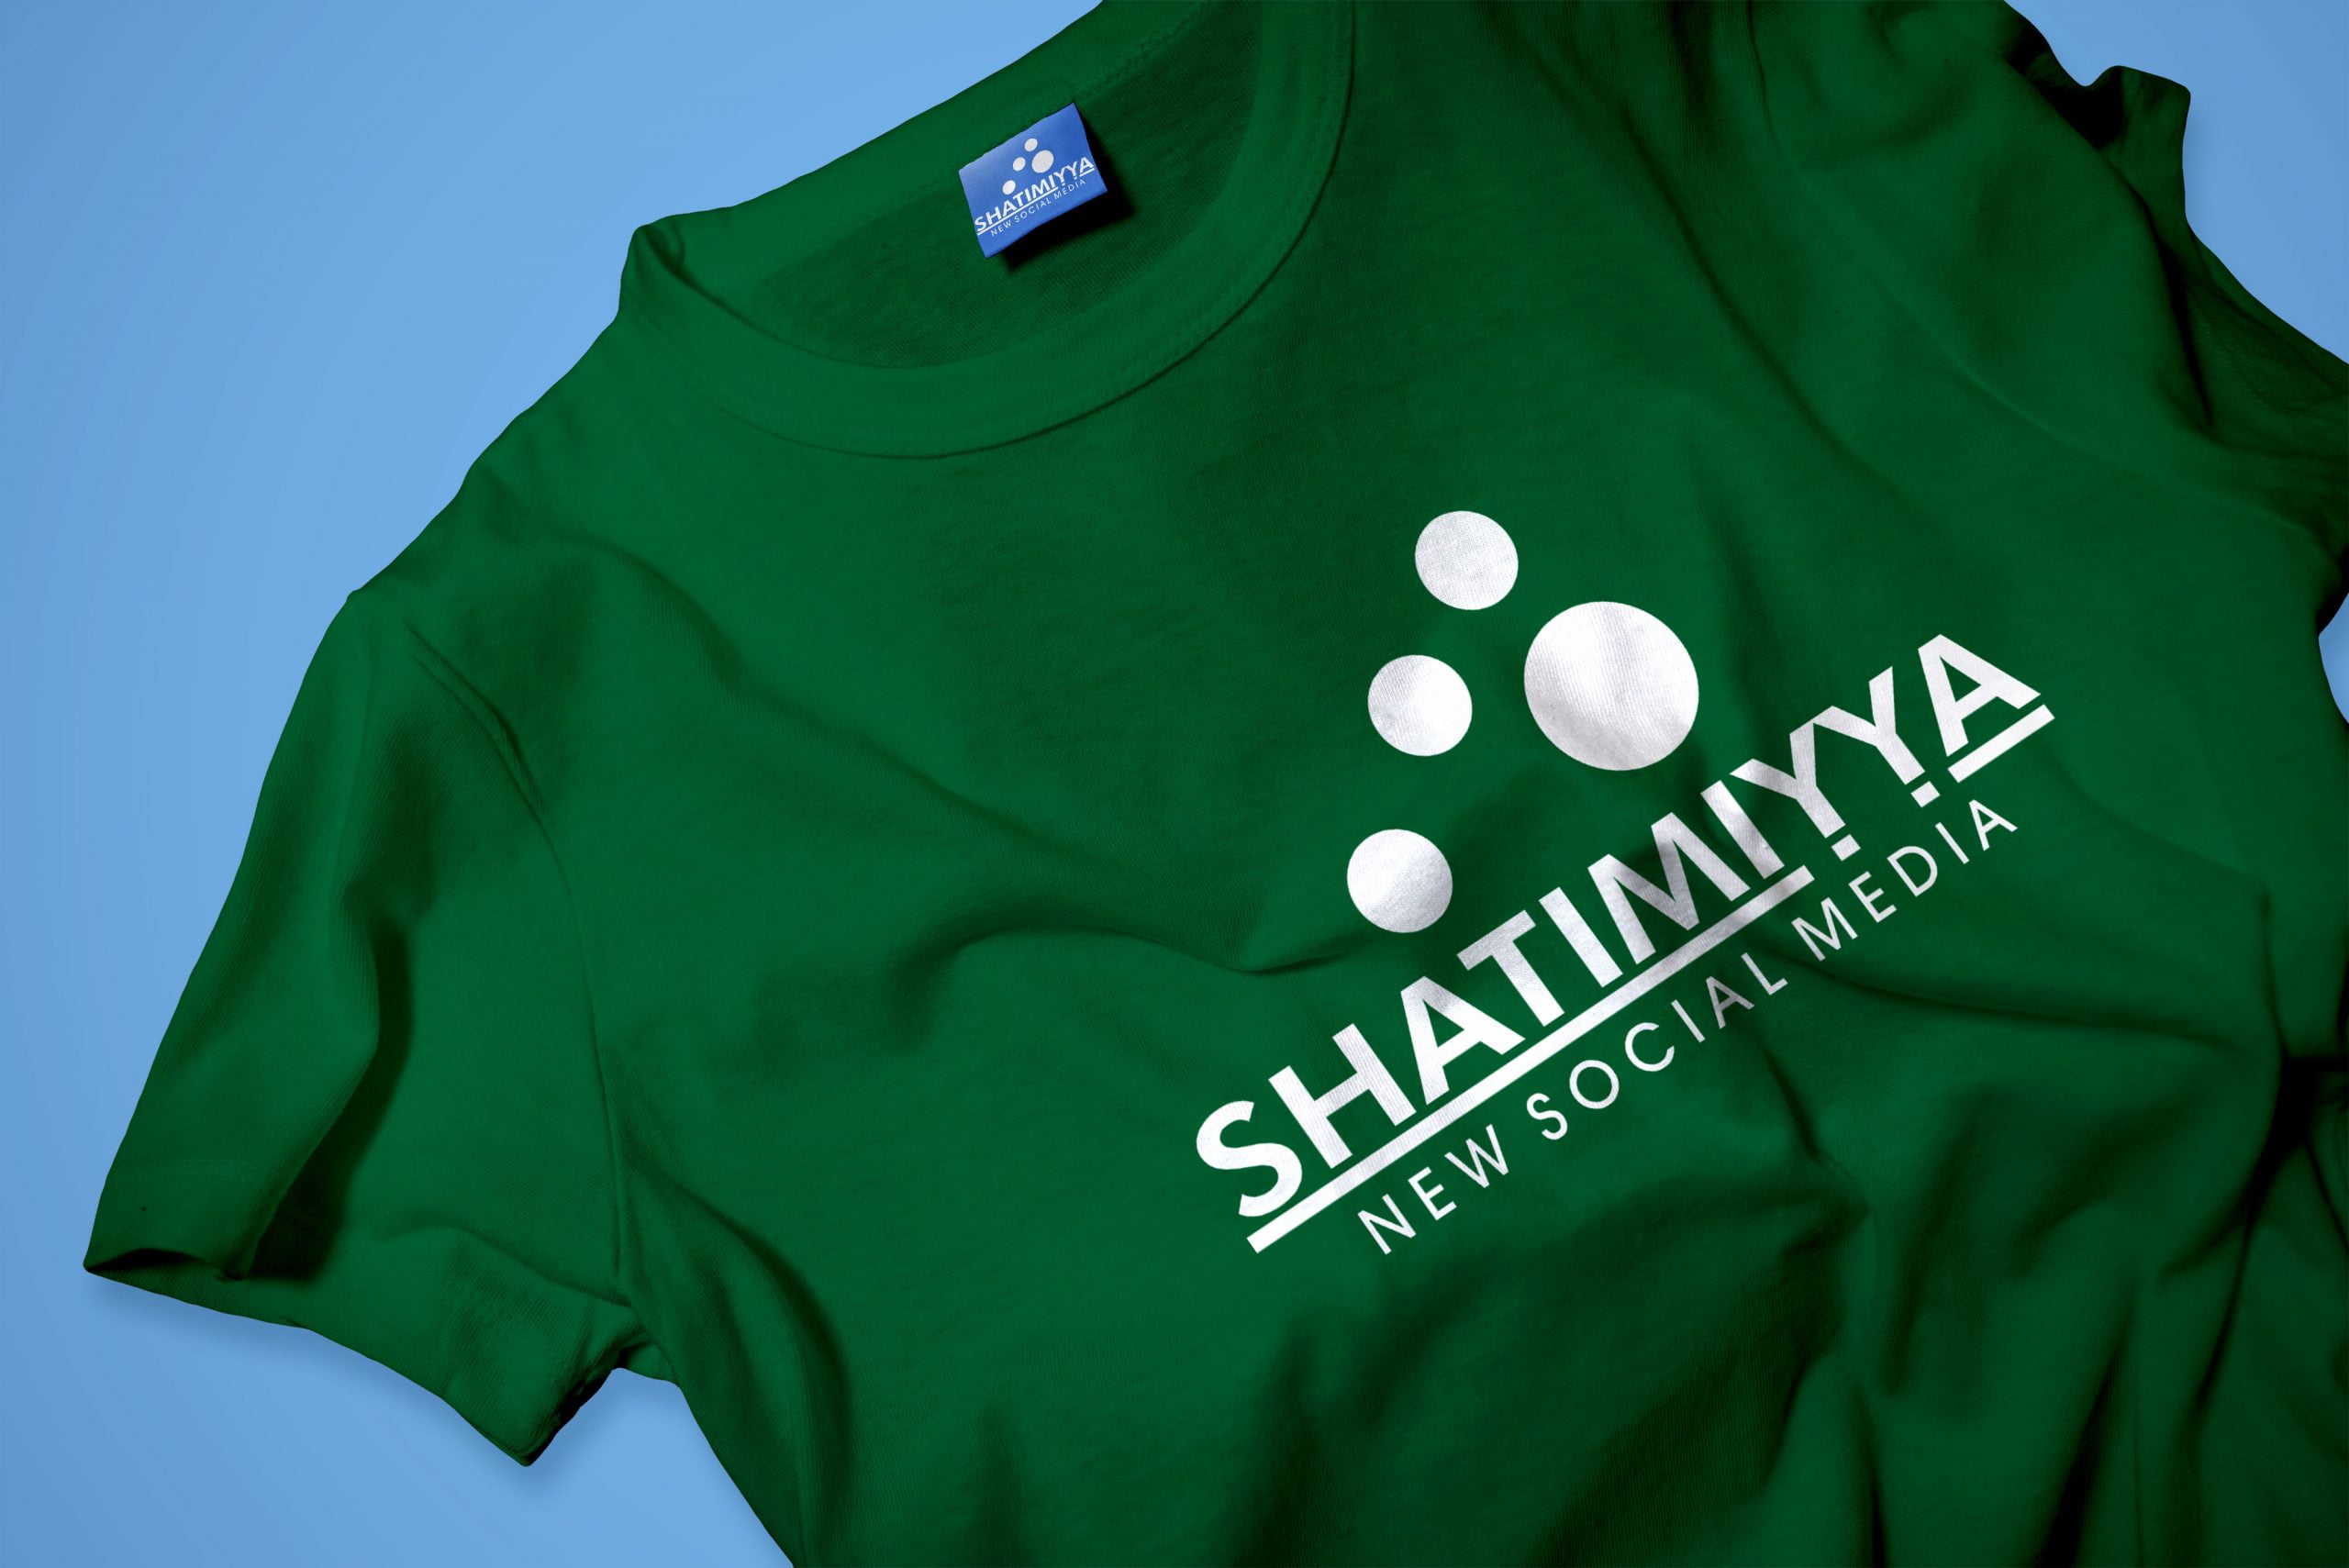 shatimiyya new social media logo